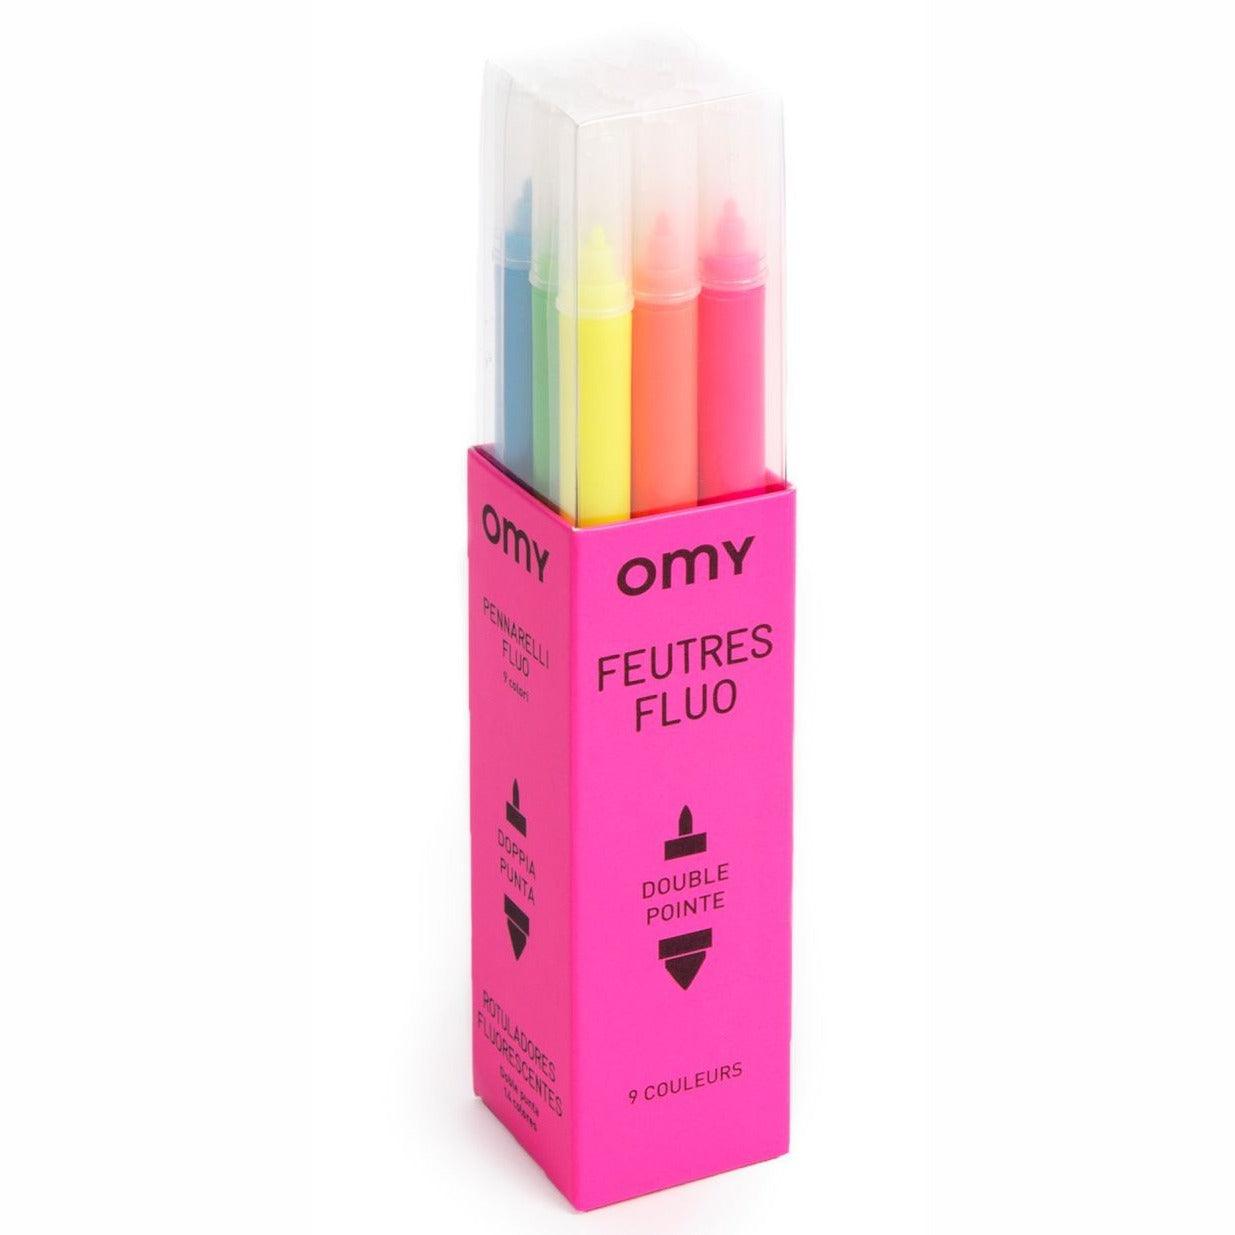 Omy: Feutres fluo neon markerek